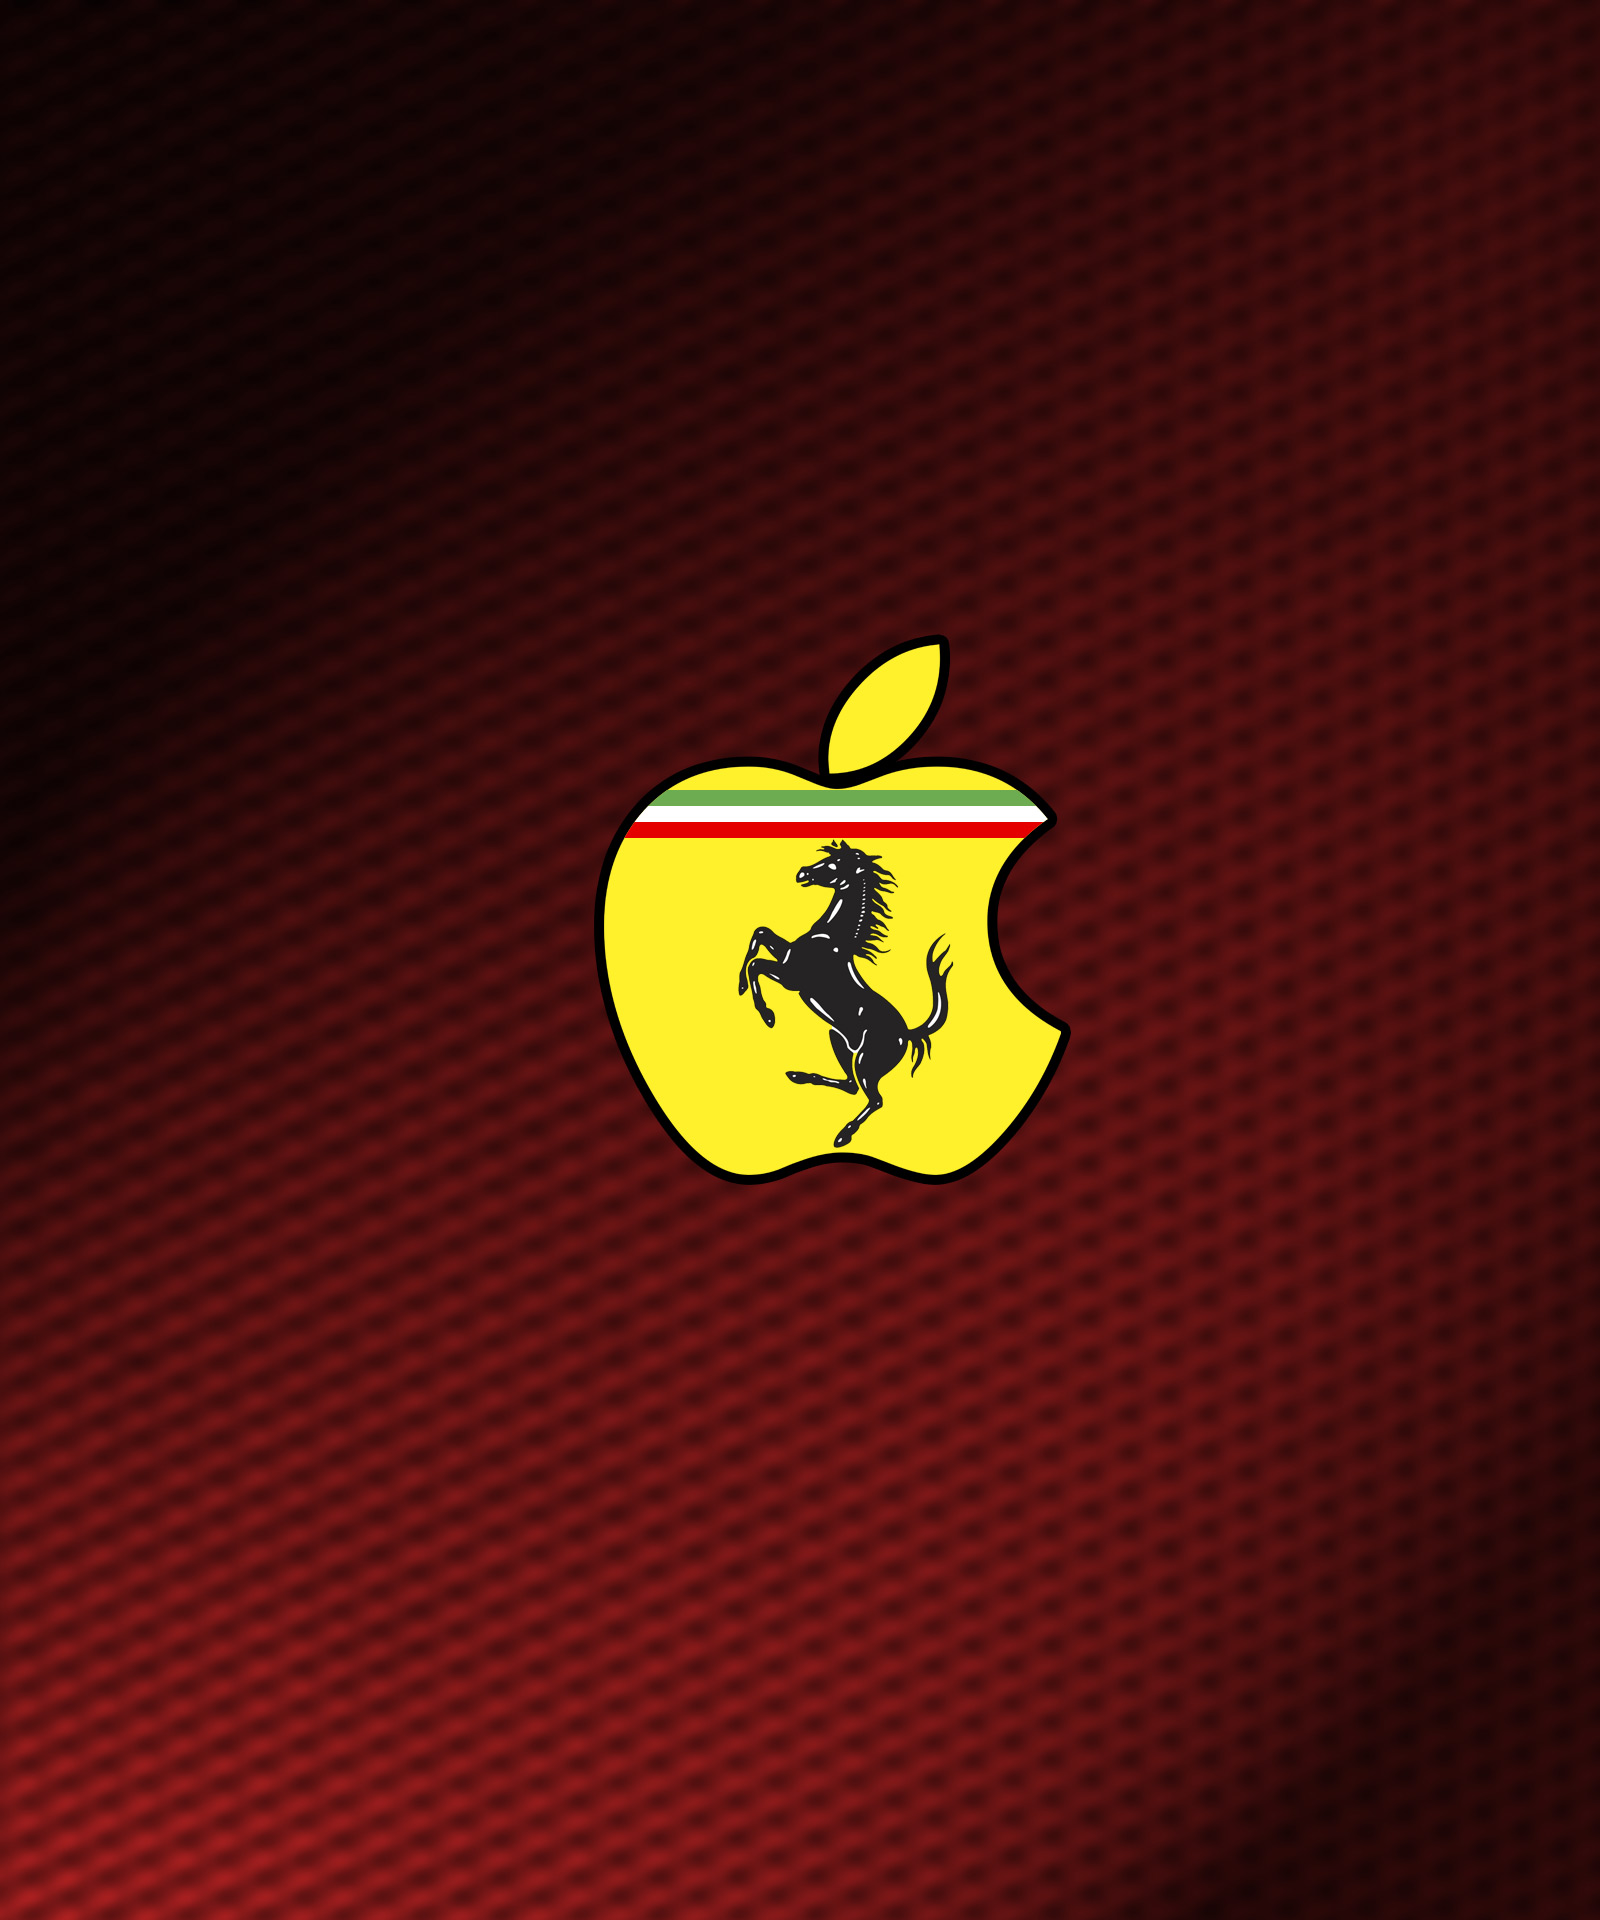 Ferrari Apple iPad Wallpaper ipadflavacom